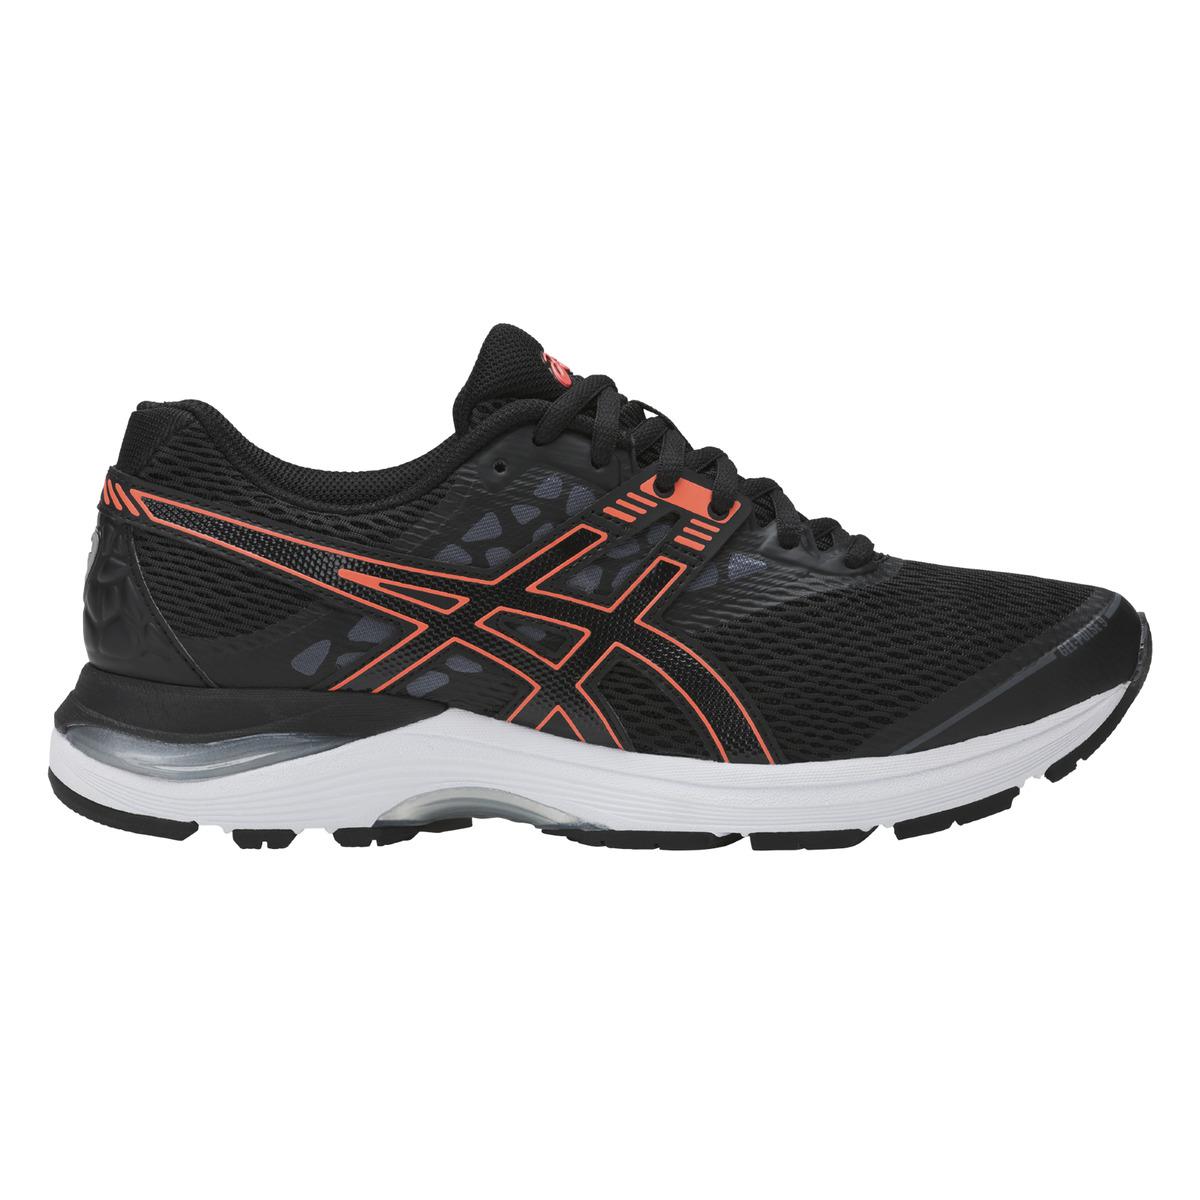 Asics Rubber Gel-pulse 9 Running Shoes in Black / Orange (Black) - Lyst